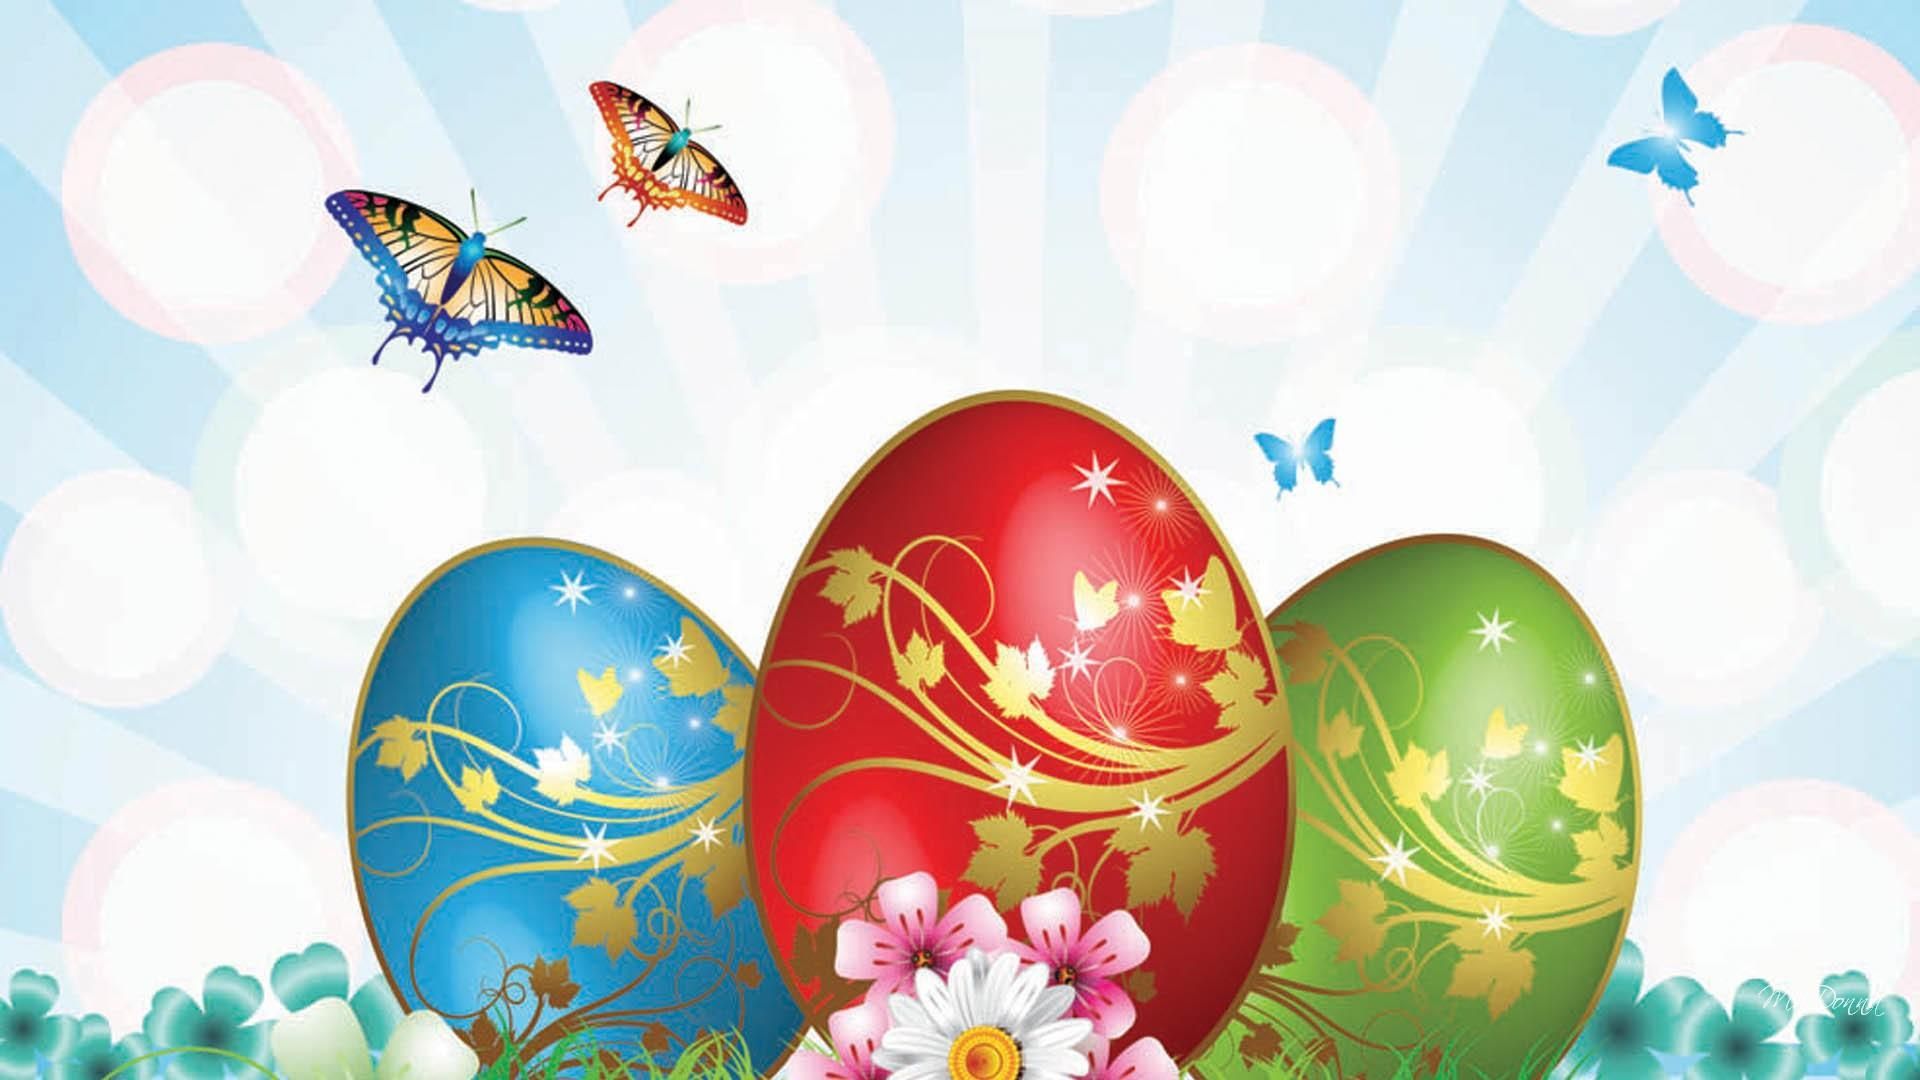 Free download Easter eggs wallpaper 2014 2014 Happy Easter egg